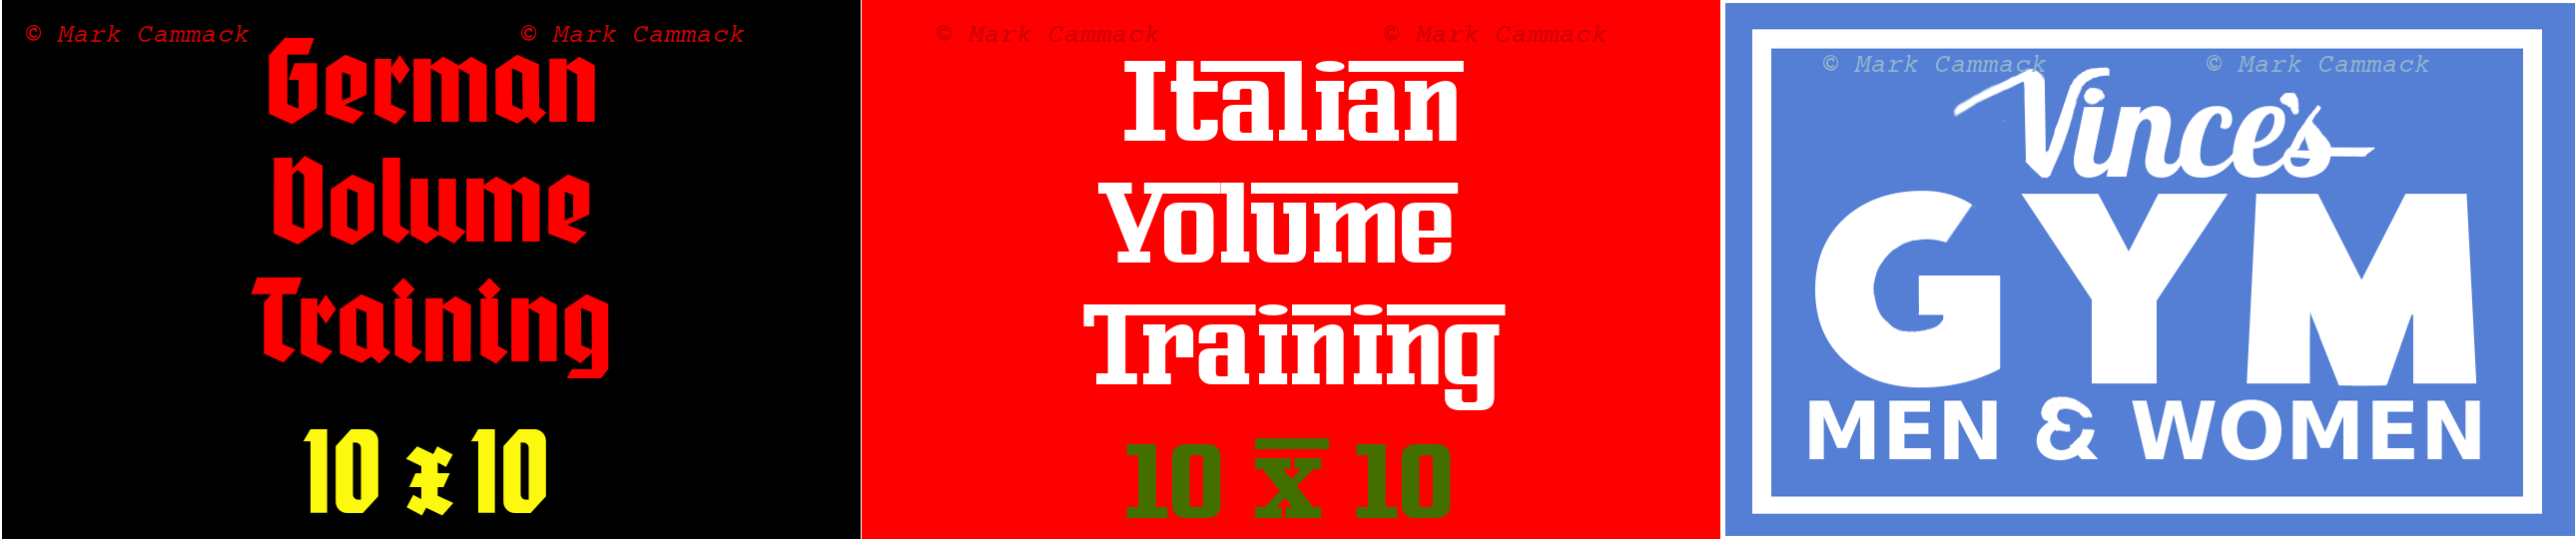 Forms of the 10 x 10: German Volume Training 10 x 10, Italian Volume Training 10 x 10, Vince's Gym 